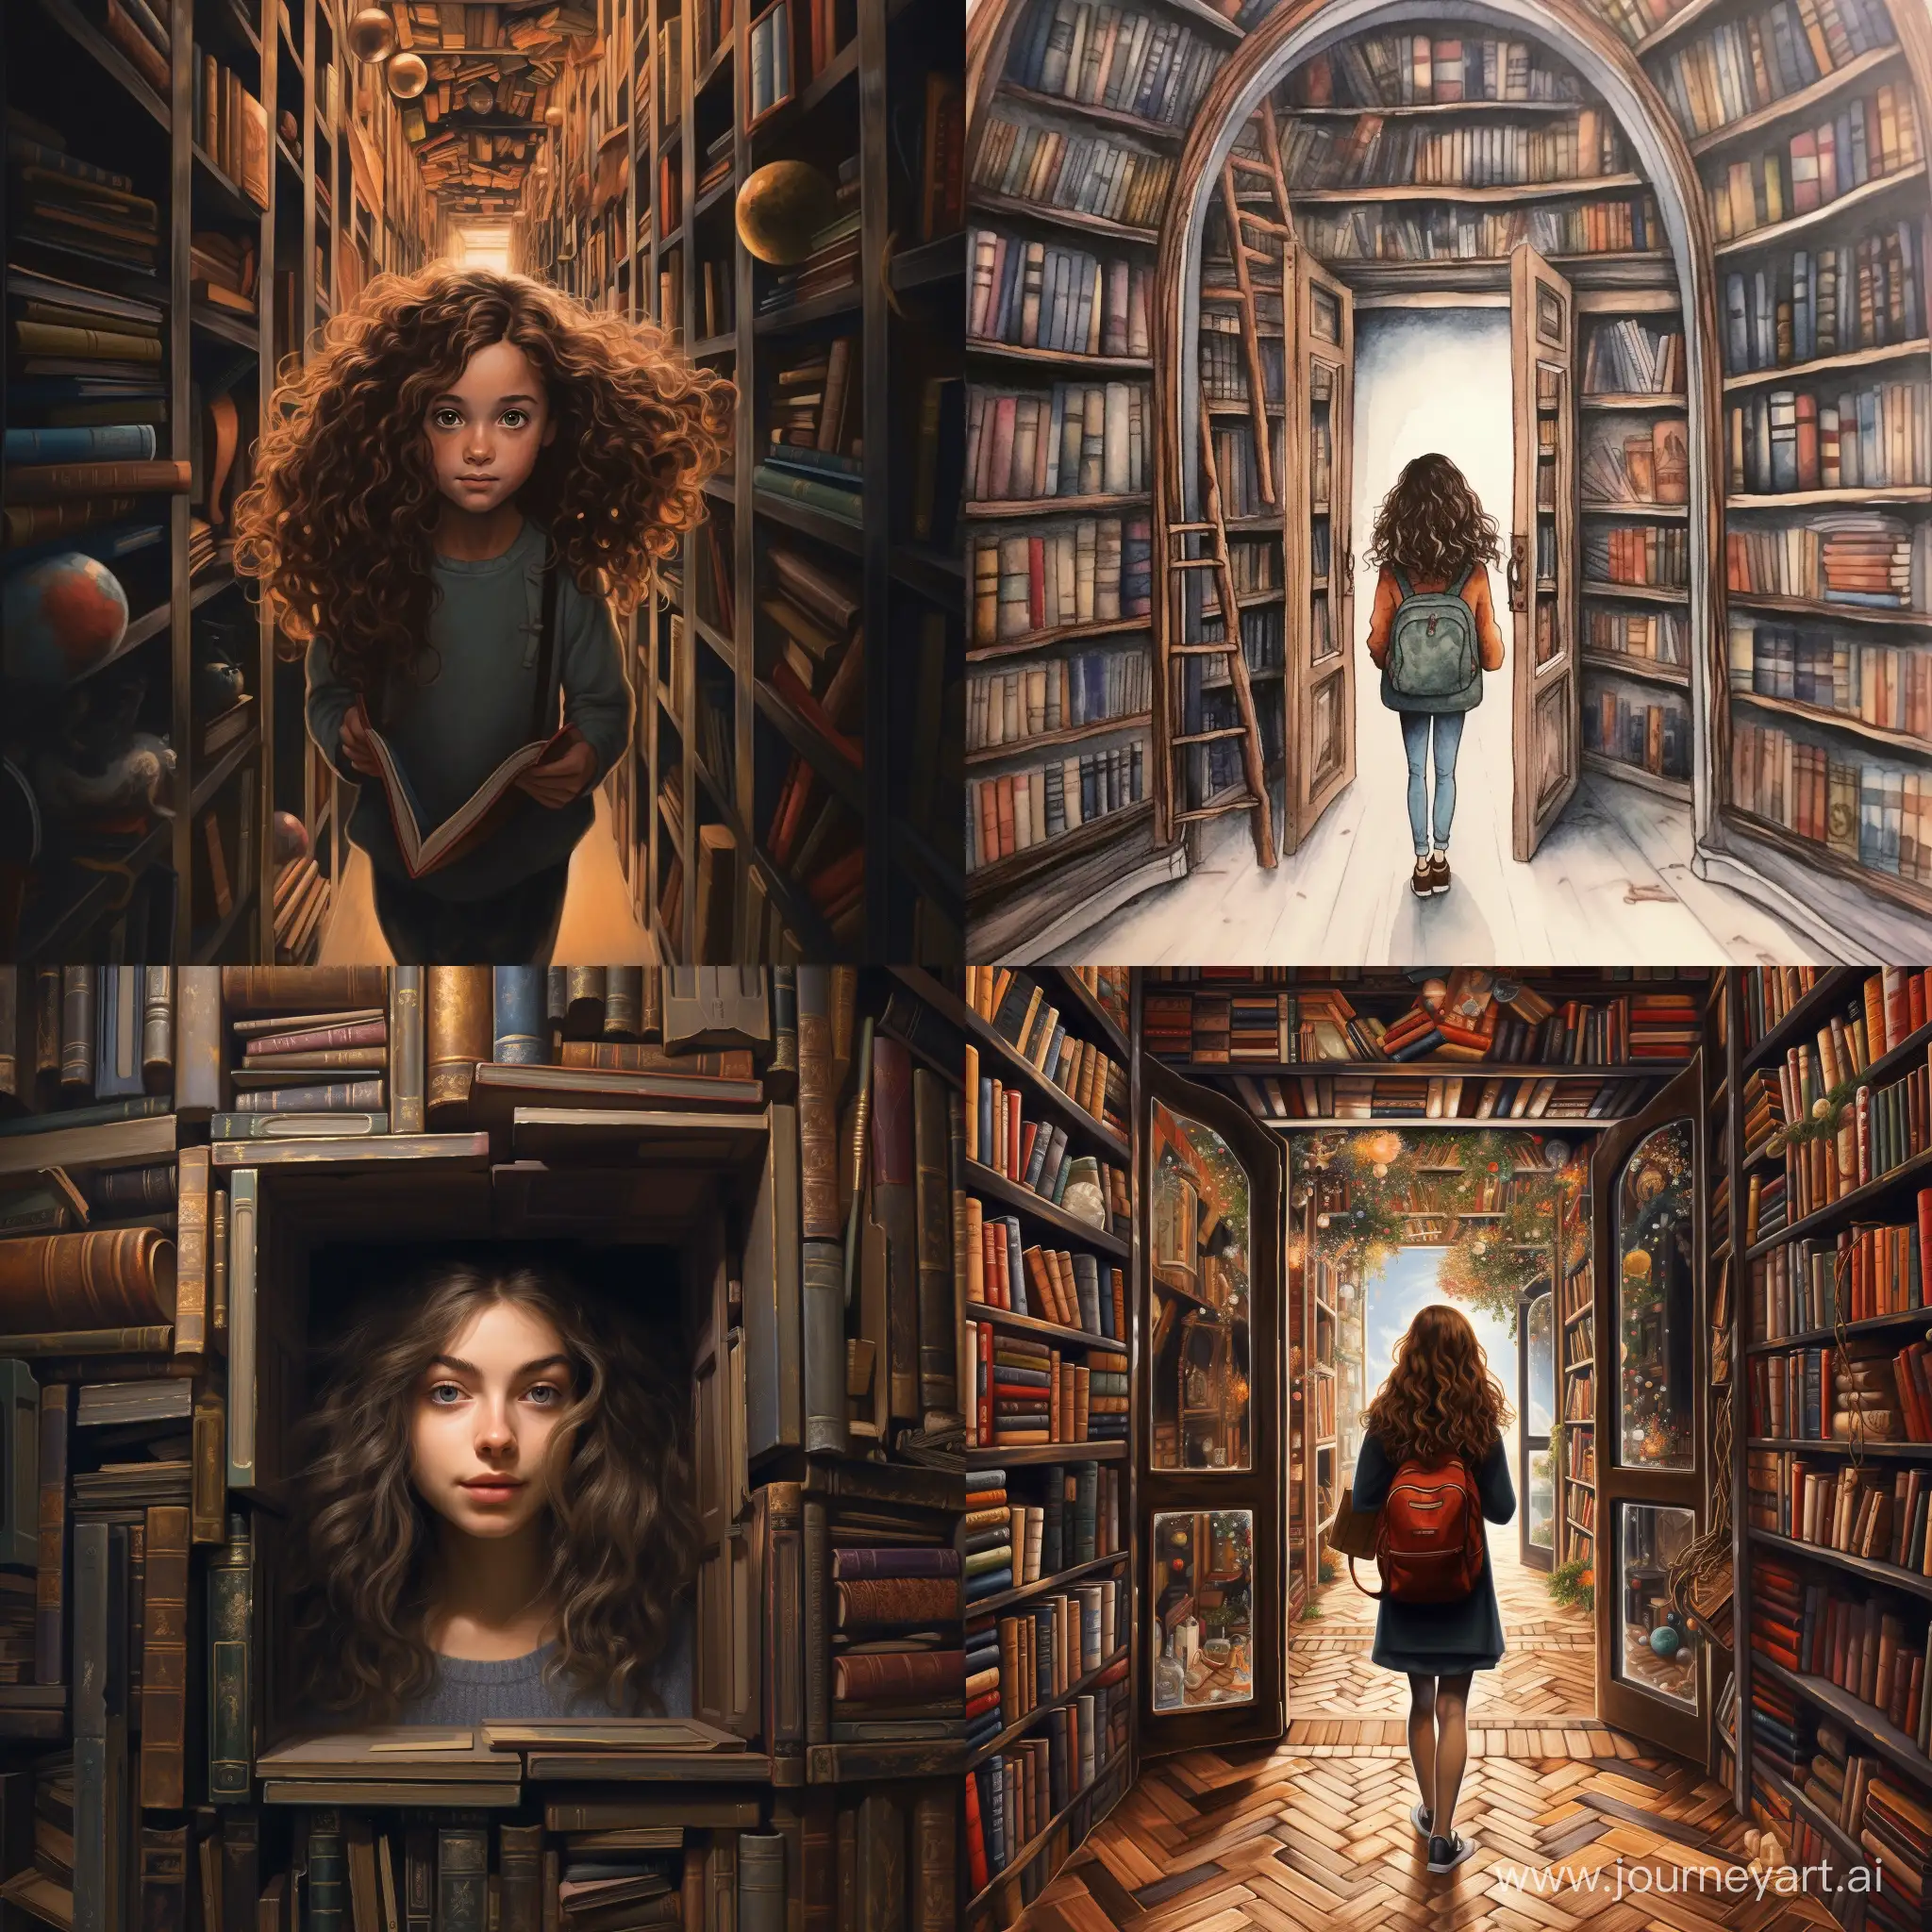 Curious-Girl-Opening-Magical-Library-Door